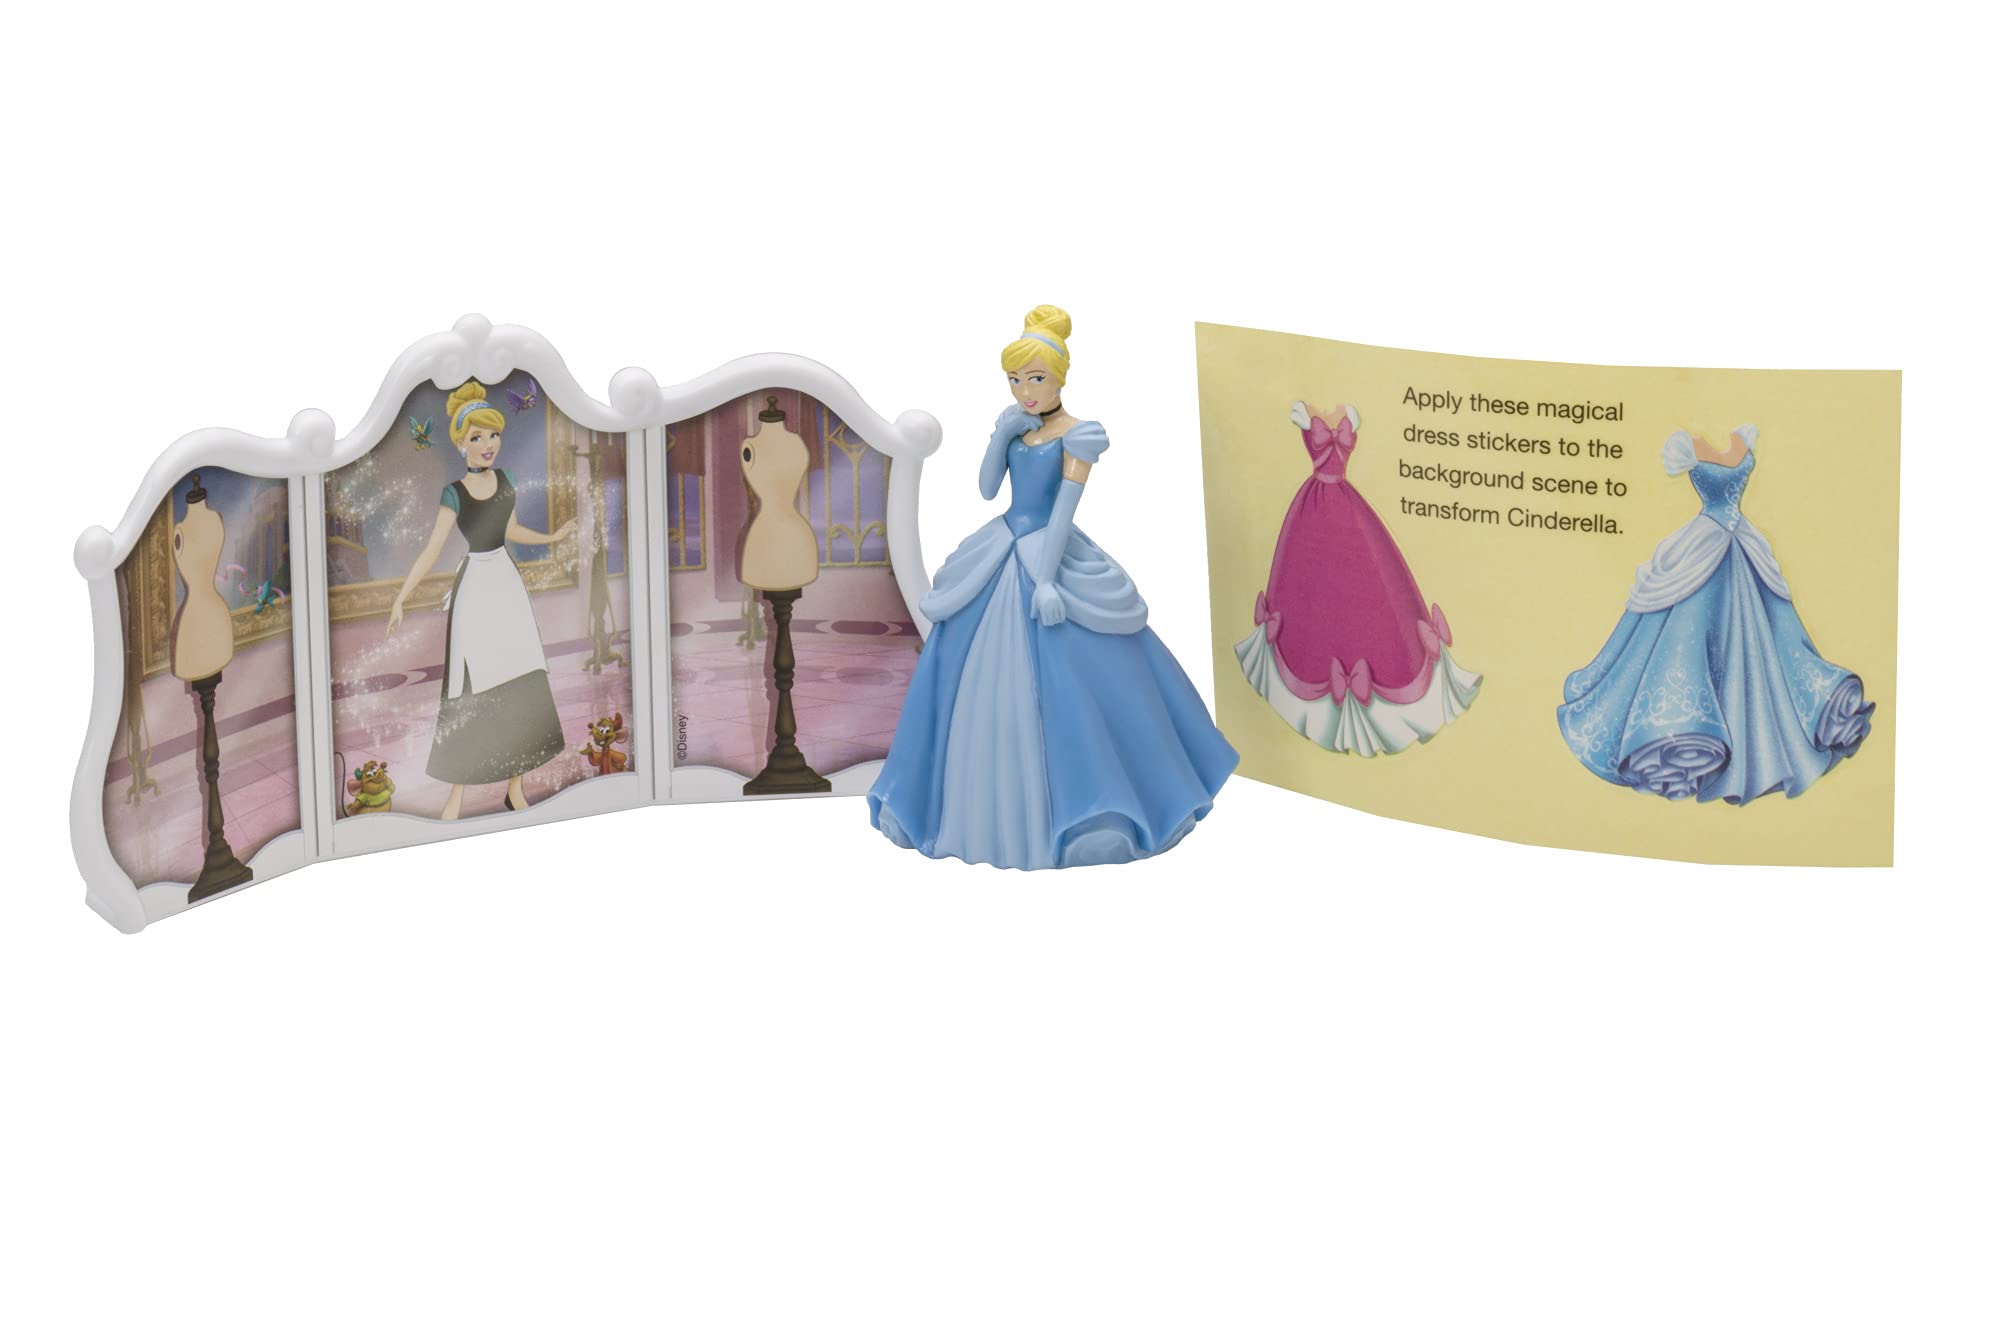 DecoSet® Disney Princess Cinderella Transforms Cake Topper, 4-Piece Birthday Cake Decorations Set with Figurine and Dress Stickers